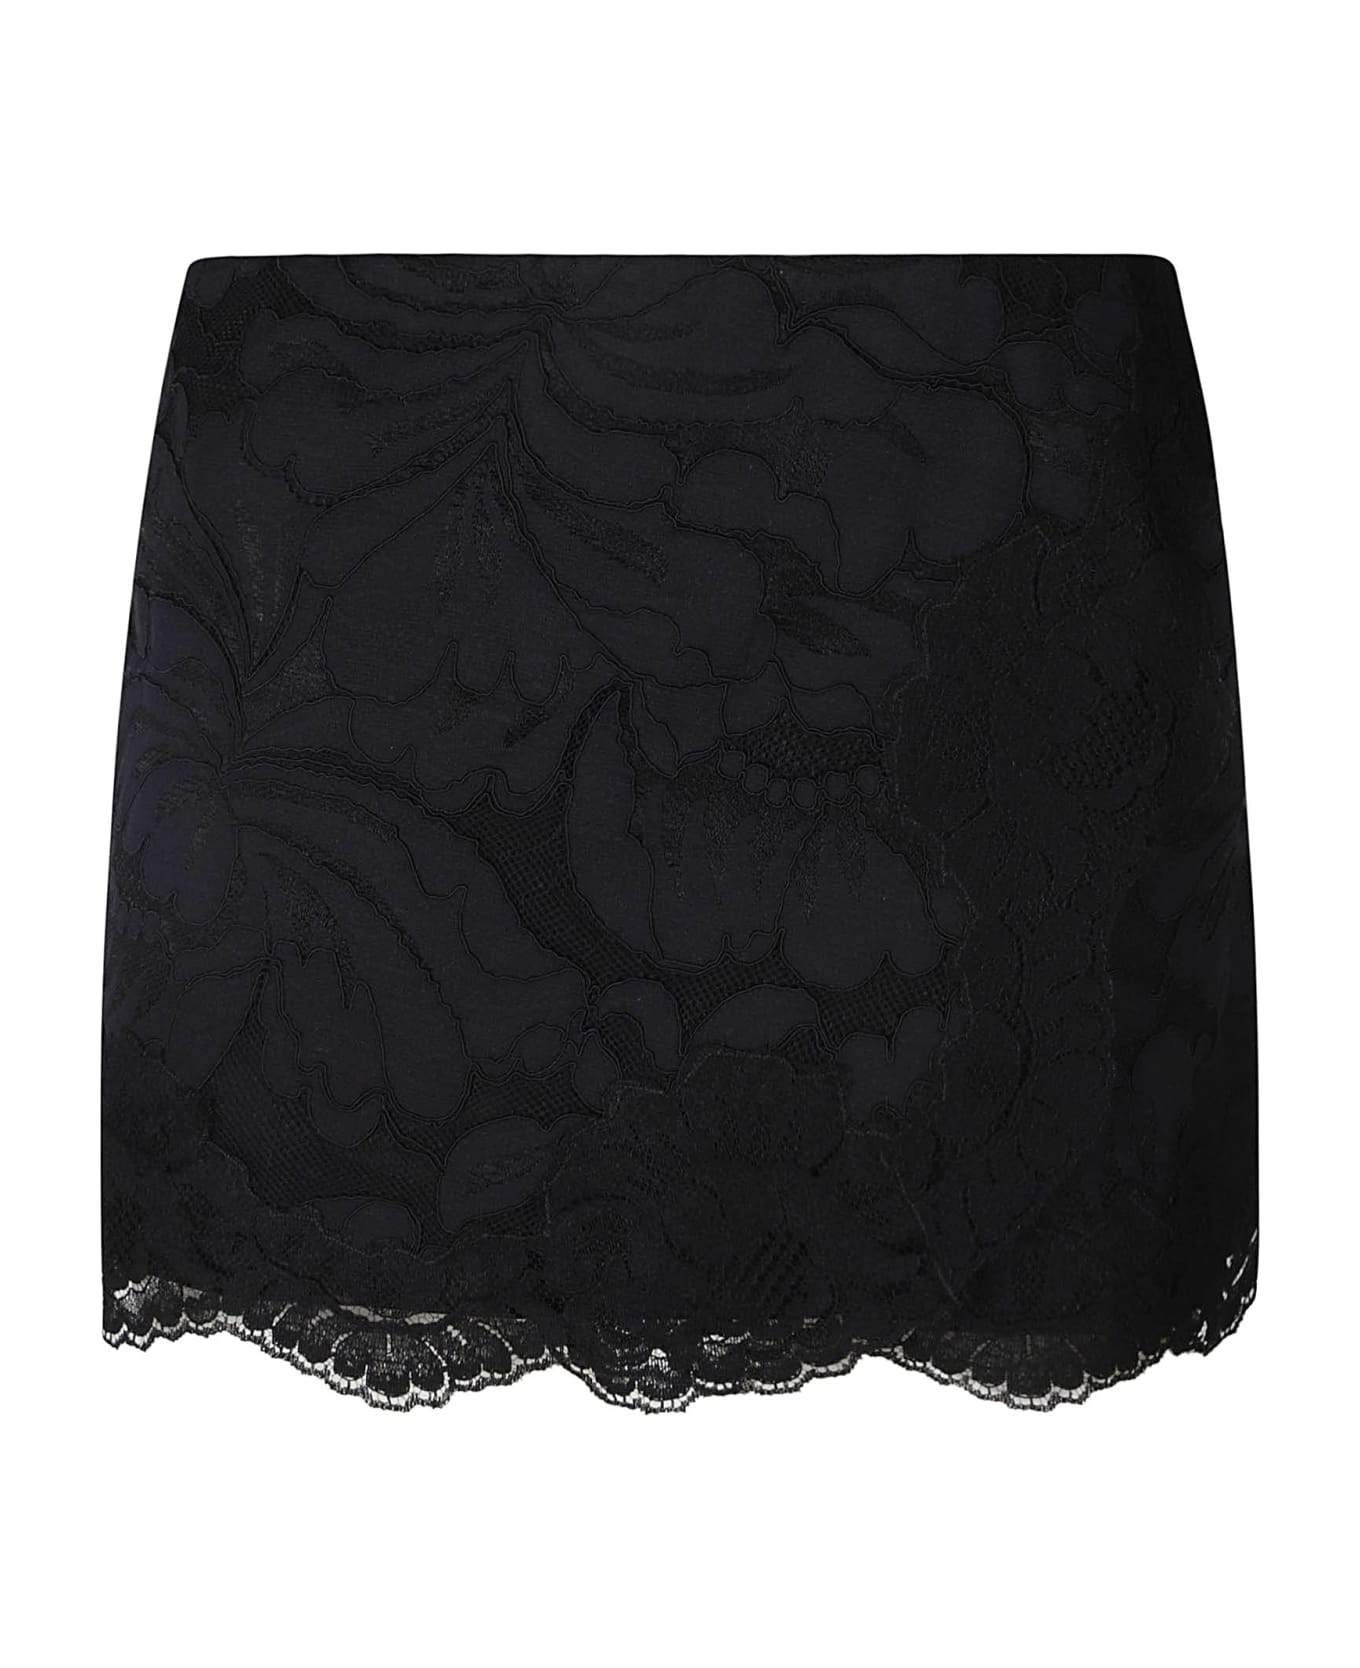 N.21 Floral Laced Skirt - Black スカート